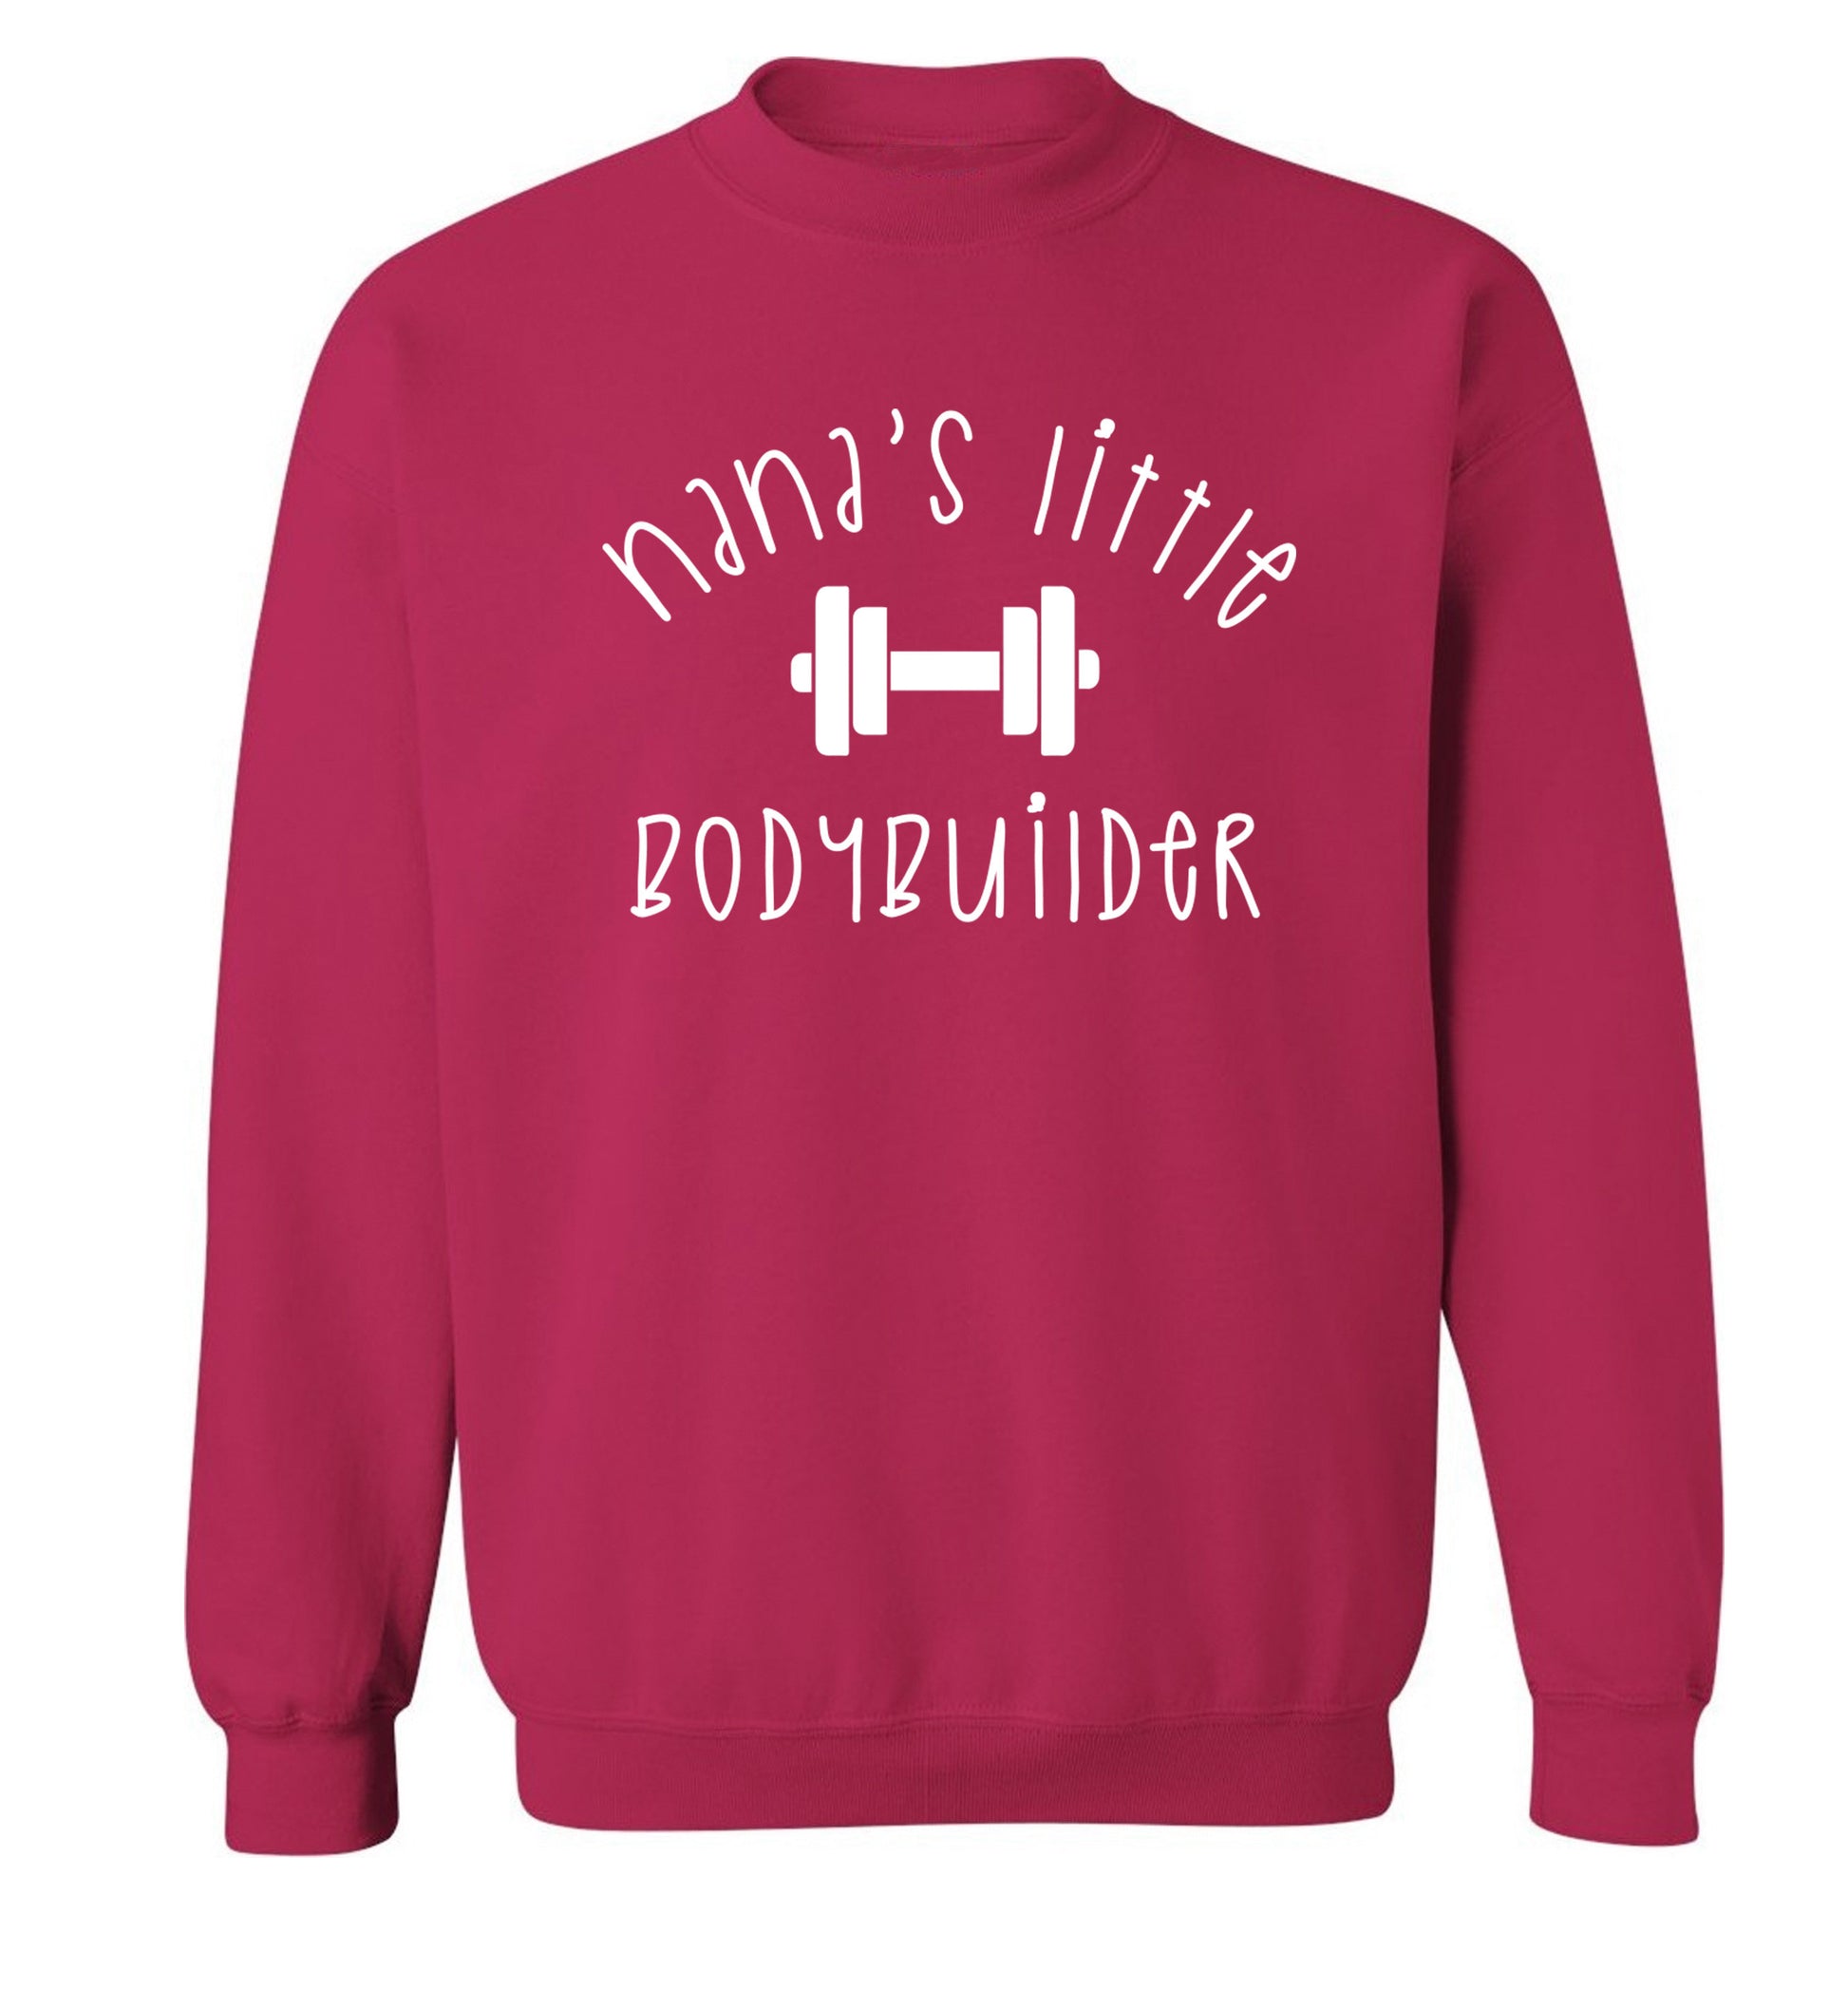 Nana's little bodybuilder Adult's unisex pink Sweater 2XL